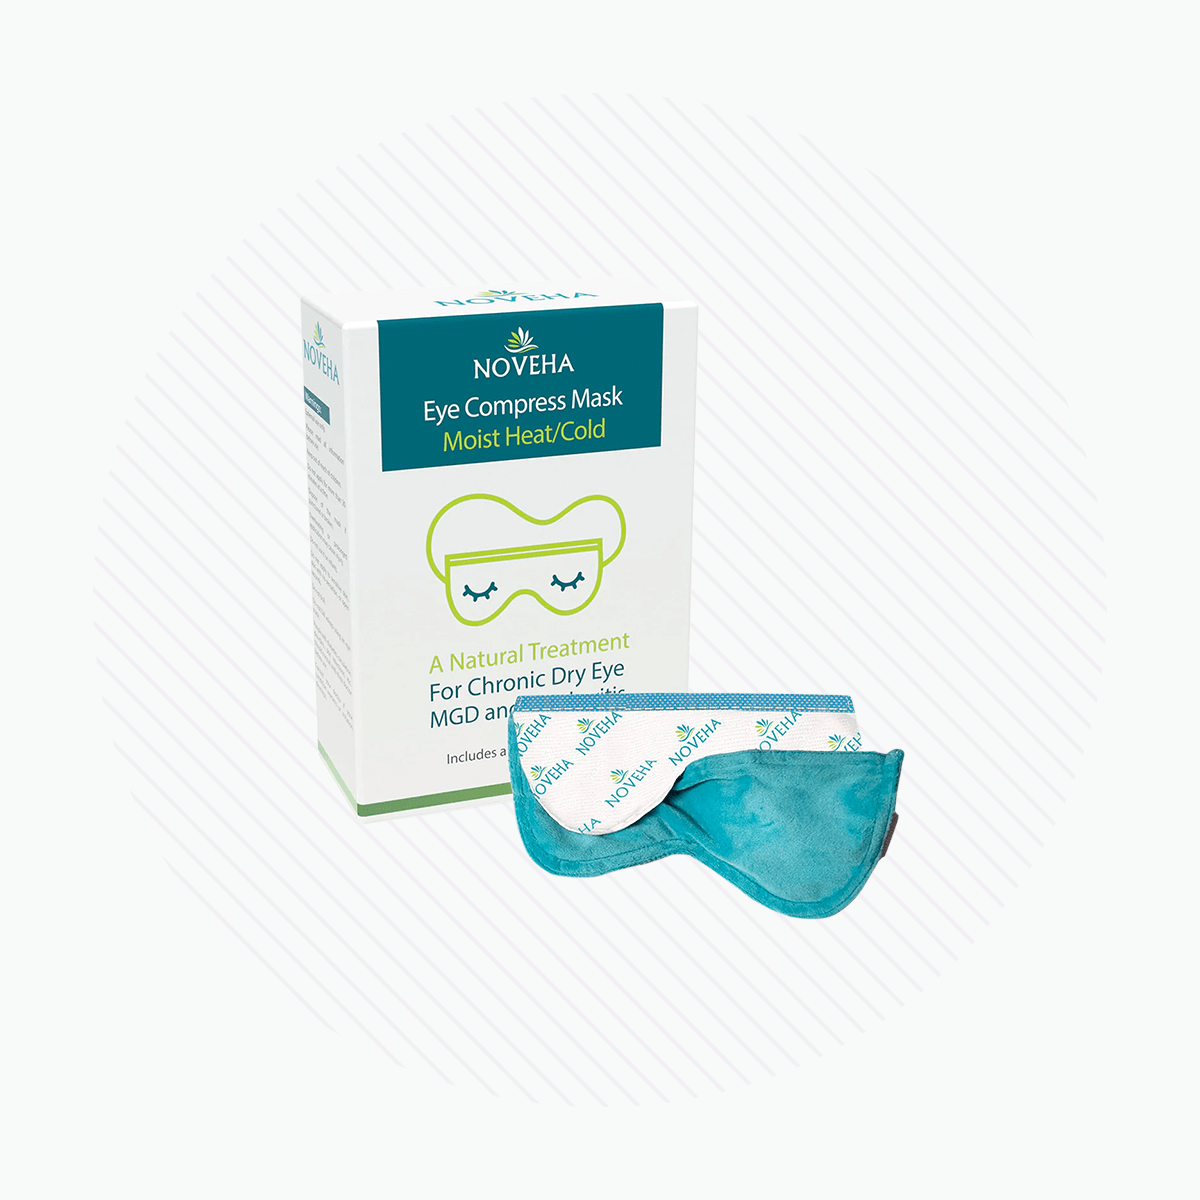 Noveha Dry Eye Mask with Washable Cover, Microwavable (Dual-Eye) - Dryeye Rescue